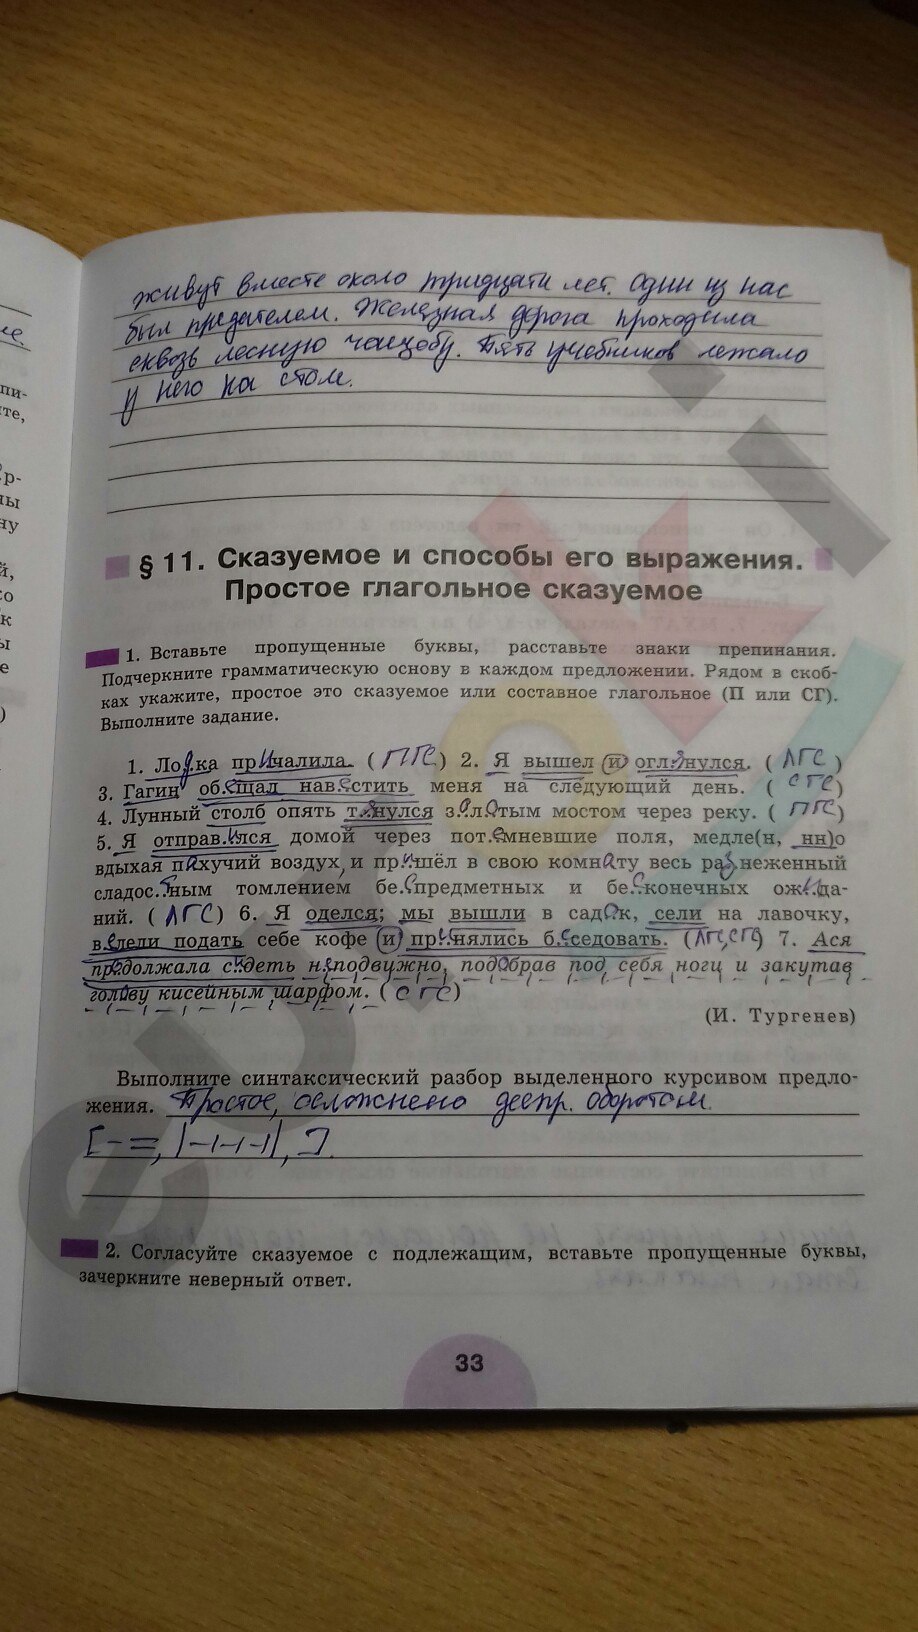 гдз 8 класс рабочая тетрадь часть 1 страница 33 русский язык Рыбченкова, Александрова